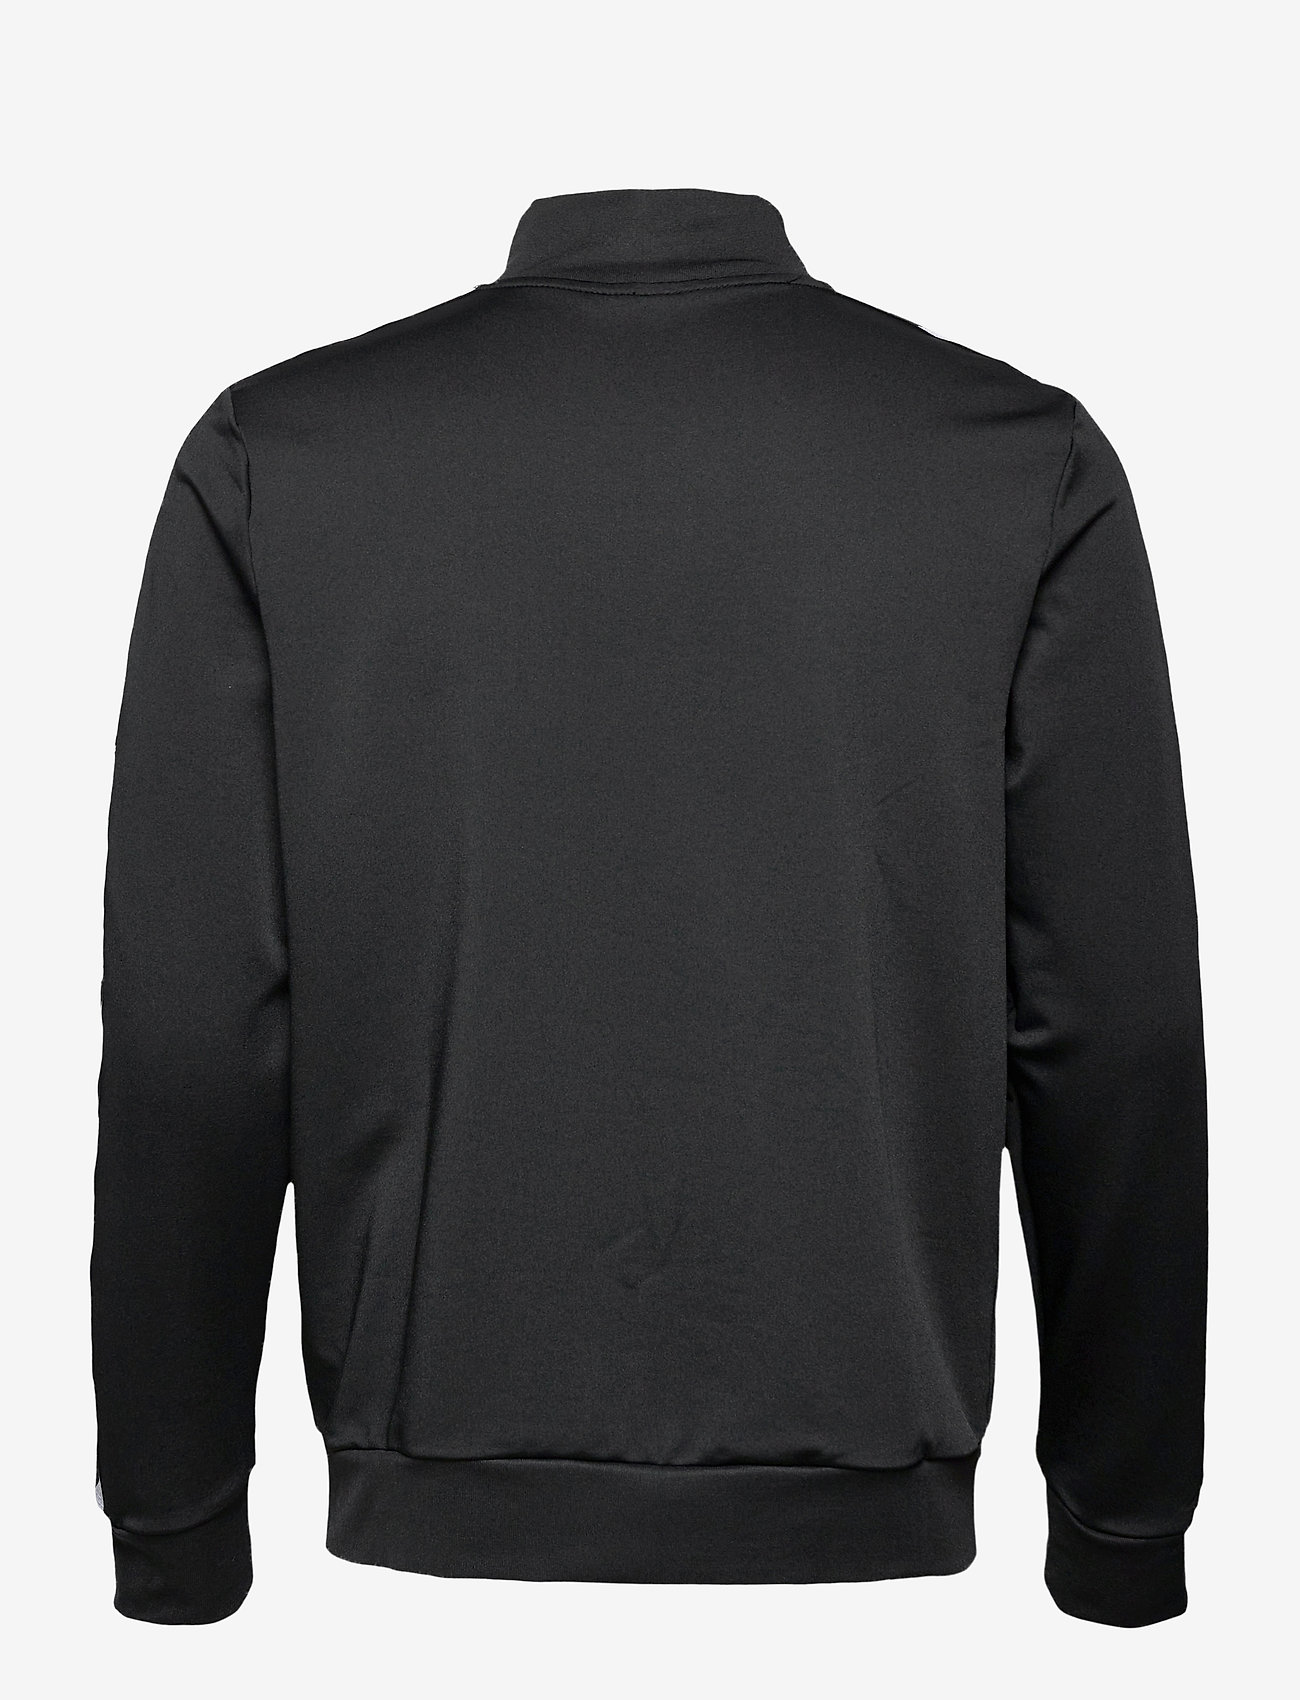 Hummel - hmlNATHAN 2.0 ZIP JACKET - sweatshirts - black - 1